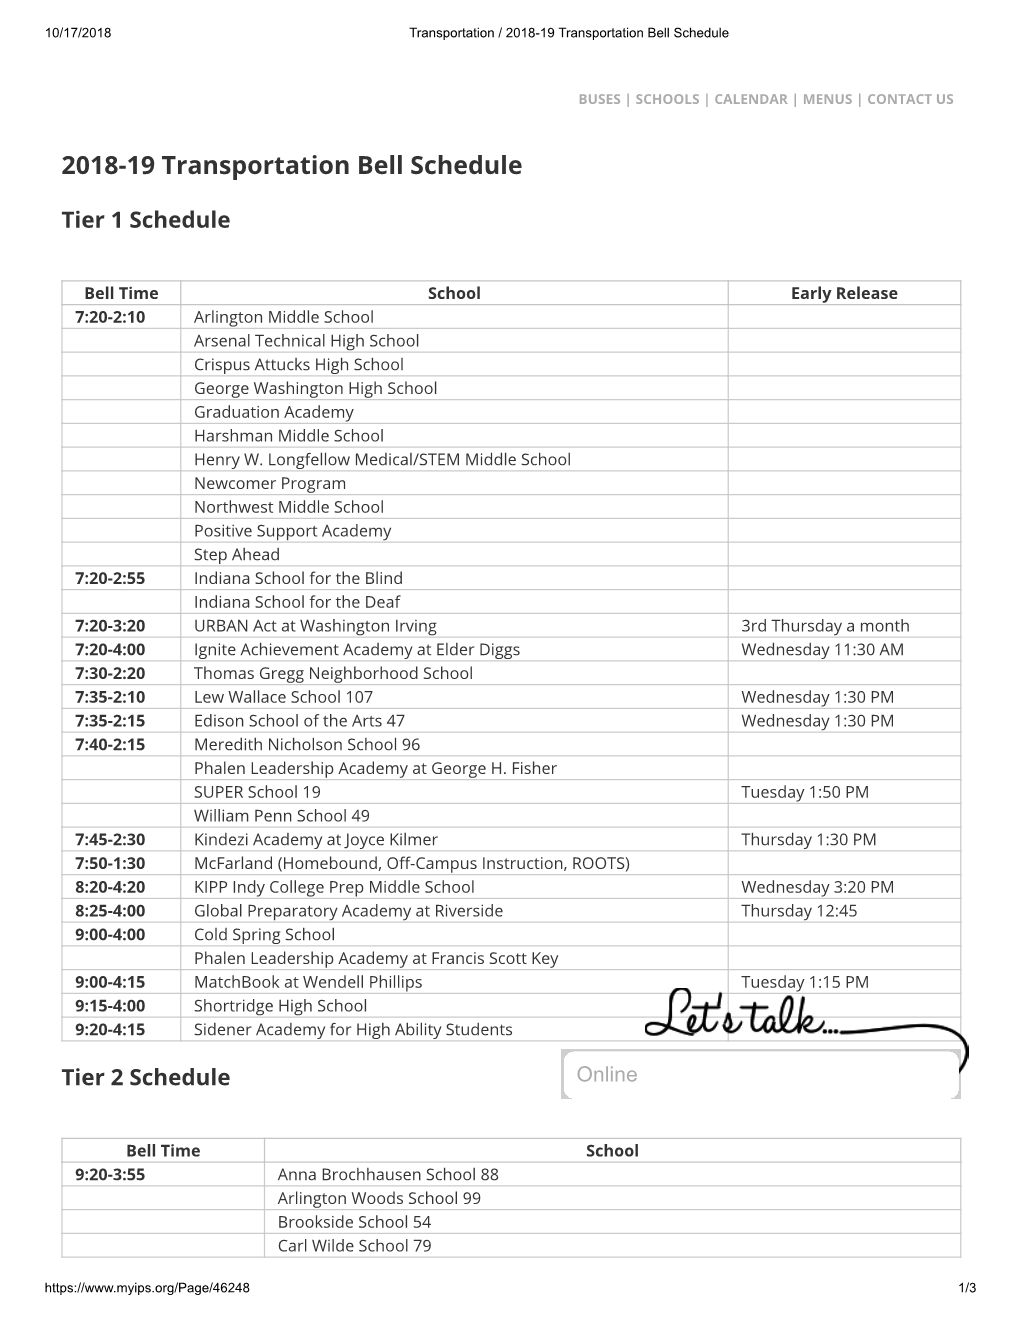 2018-19 Transportation Bell Schedule